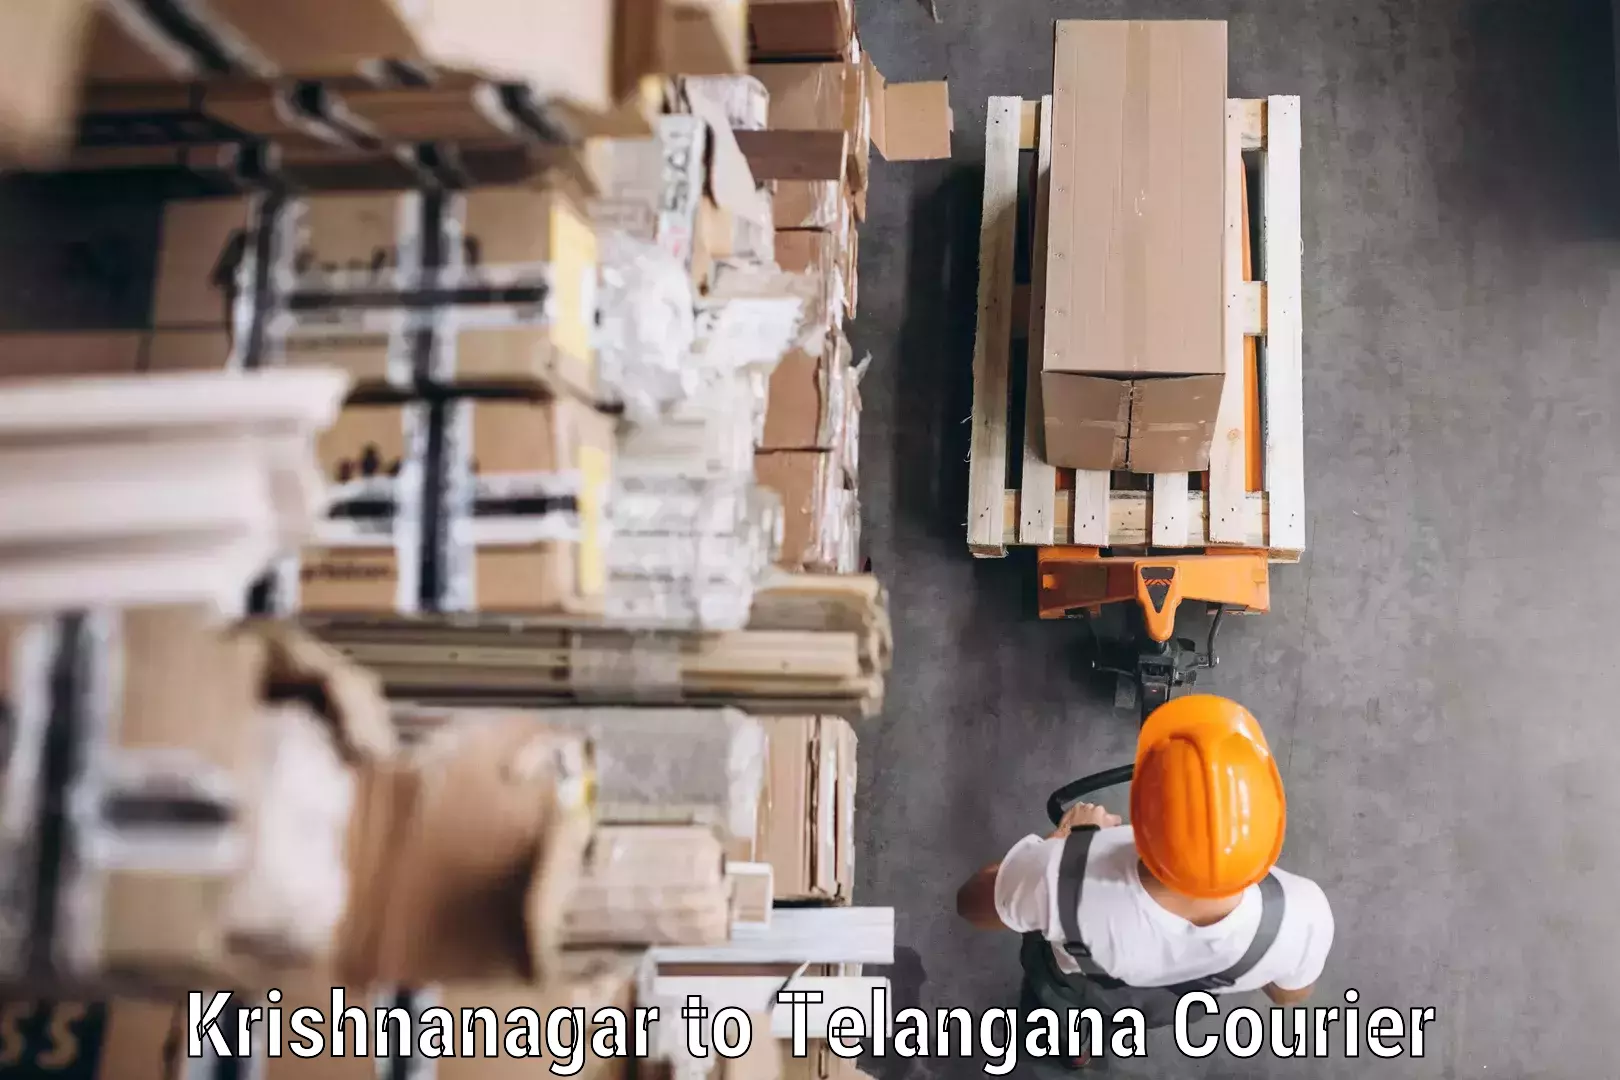 Global logistics network Krishnanagar to Narayanpet